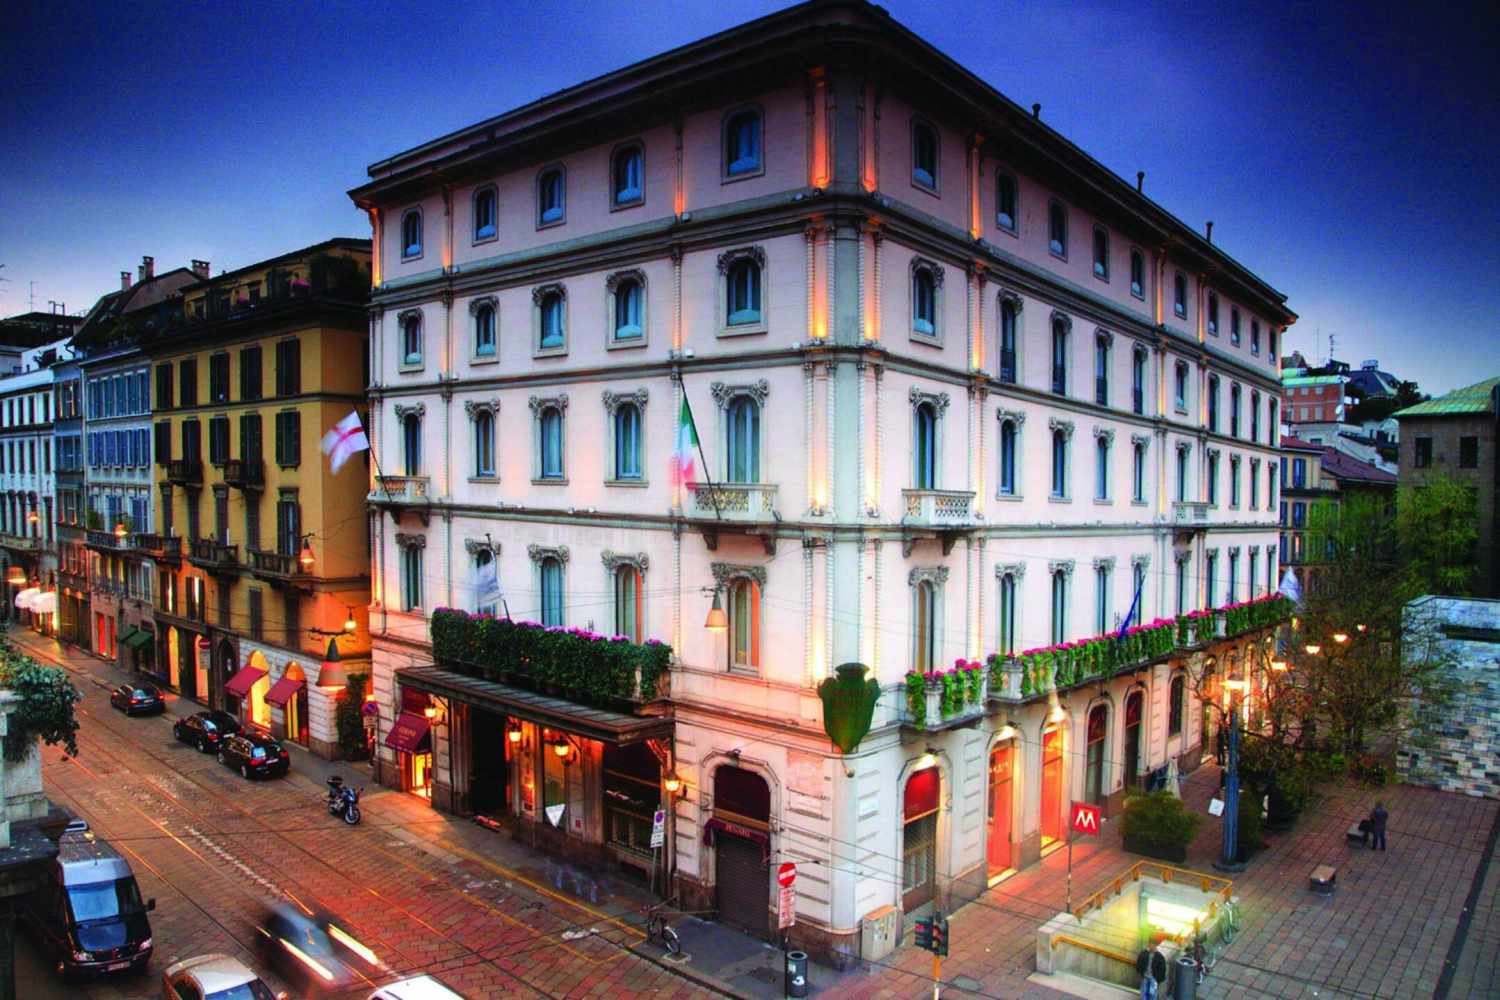 Grand Hotel et de Milan, Lombardy - Italy